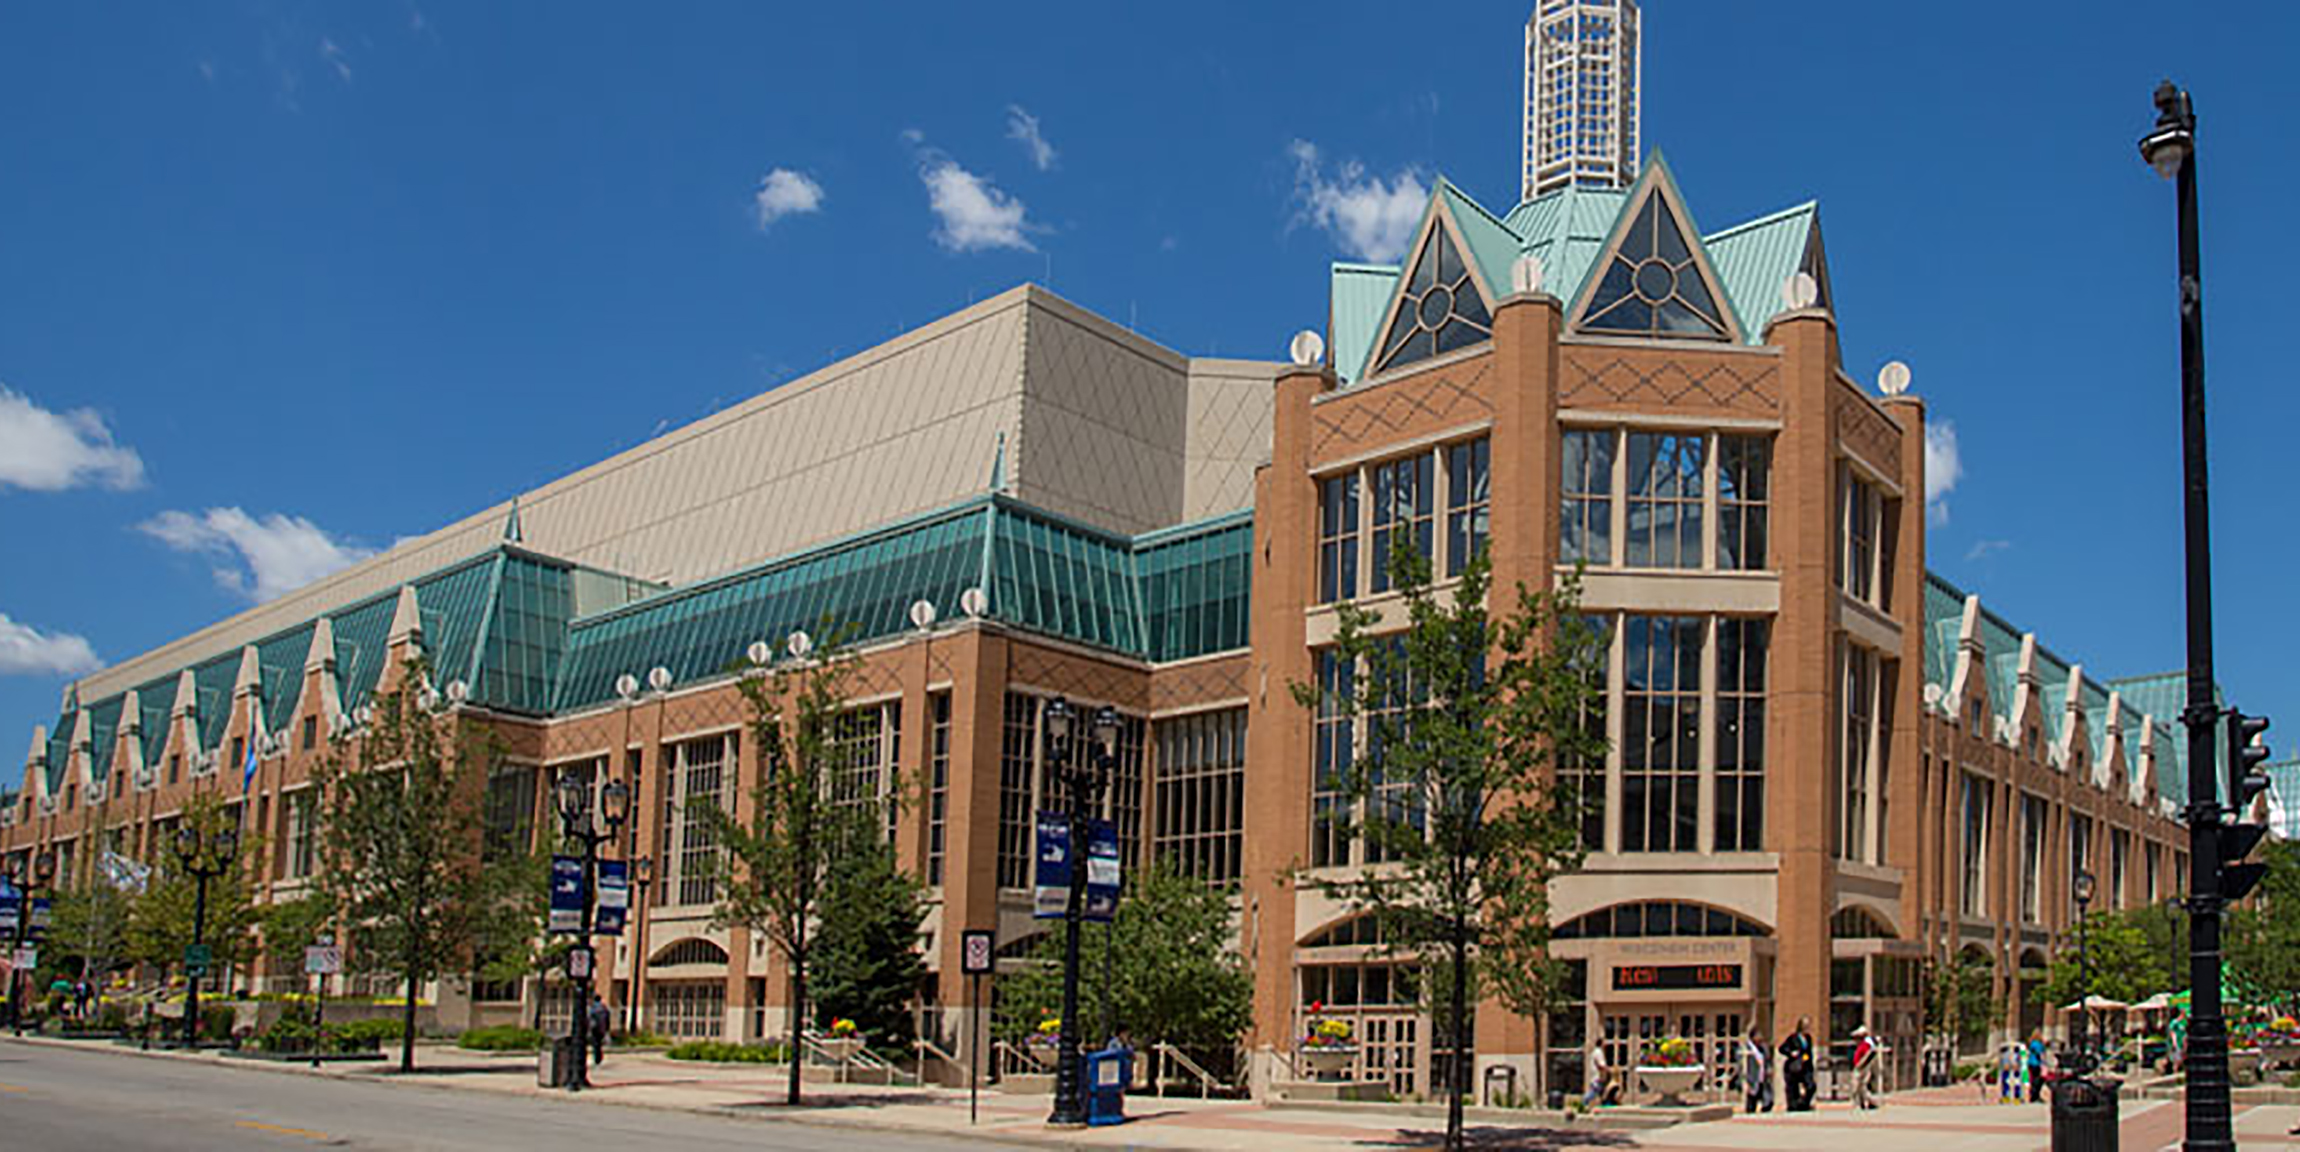 The Wisconsin Center in Milwaukee